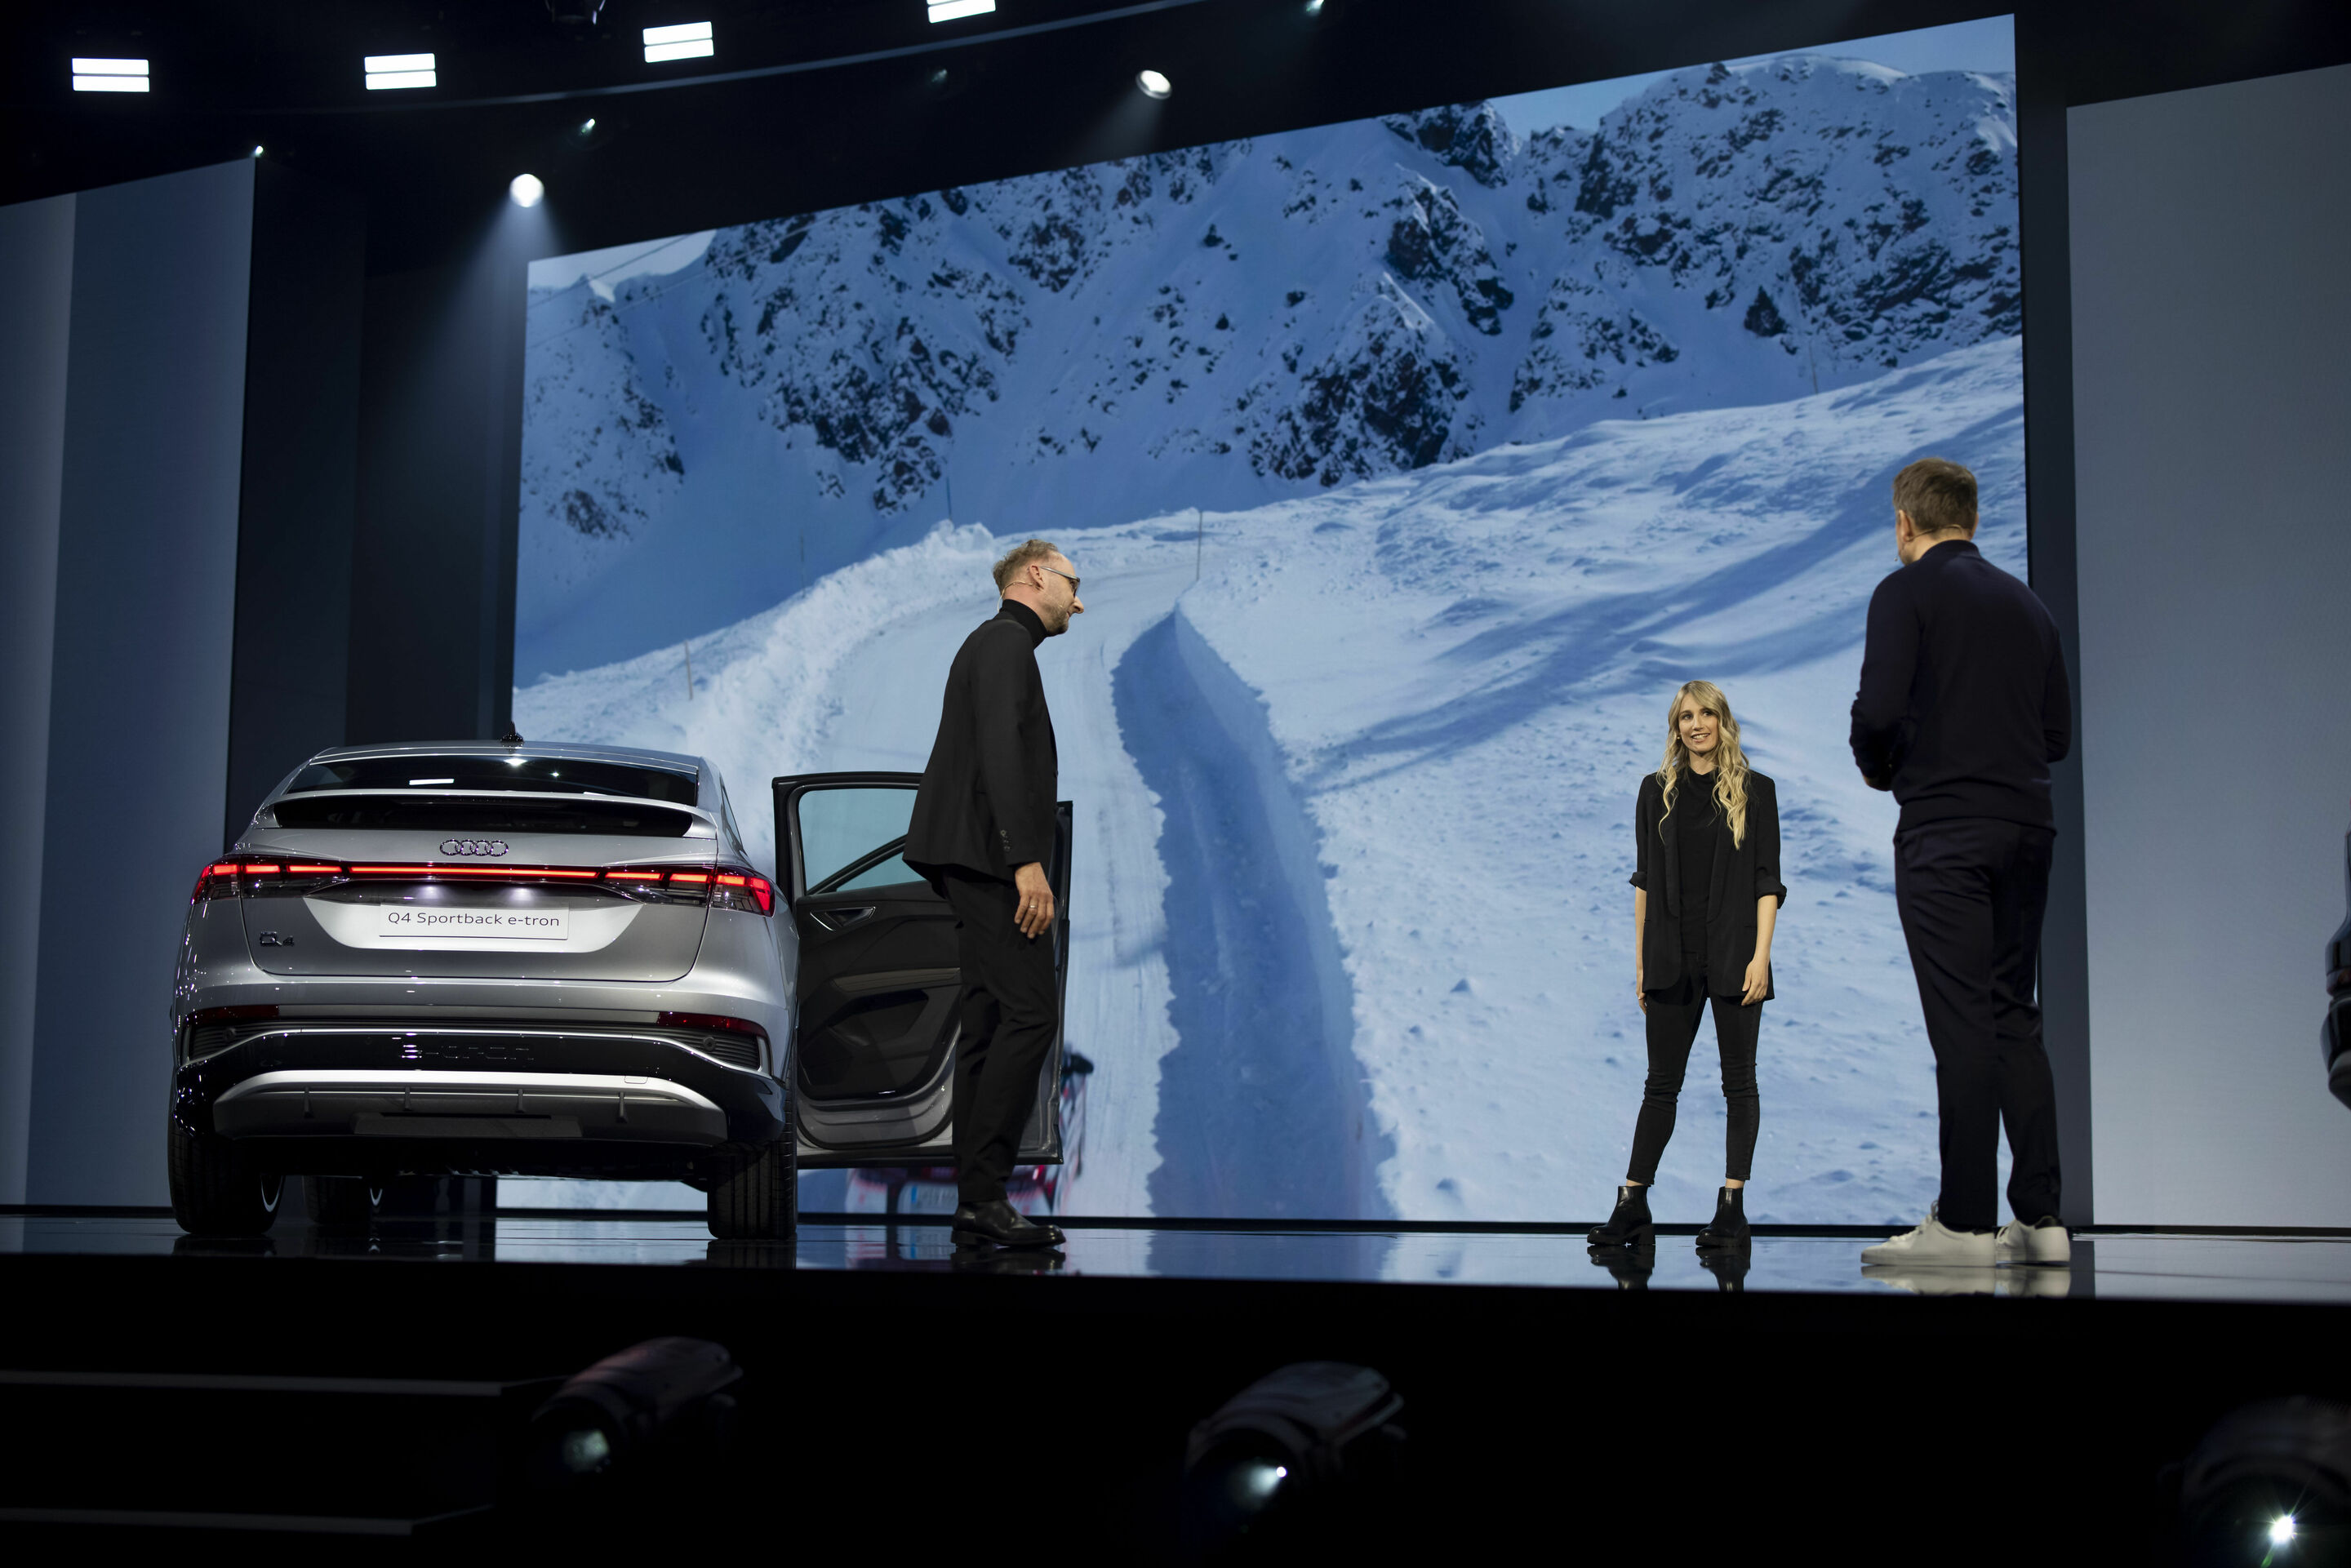 World premiere of the Audi Q4 e-tron: Celebration of Progress